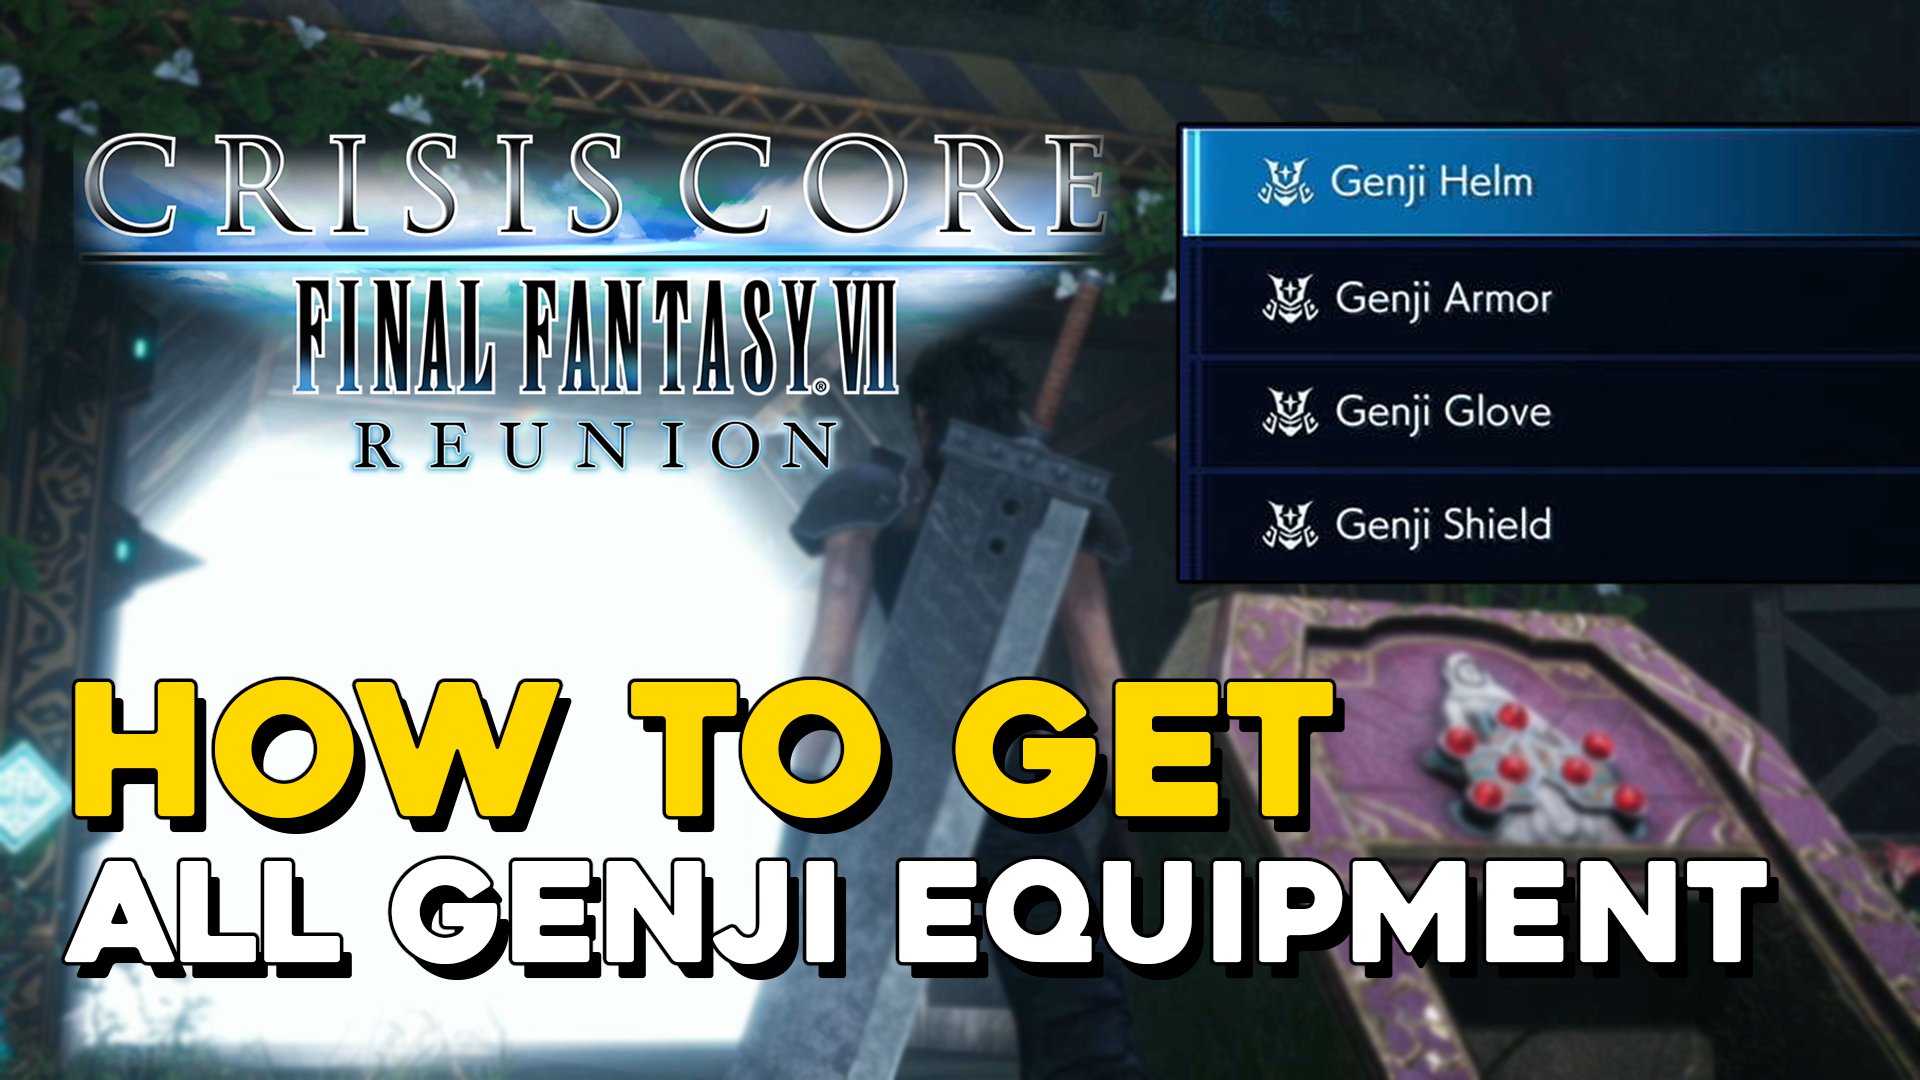 Crisis Core Final Fantasy 7 Reunion How To Get All Genji Equipment.jpg